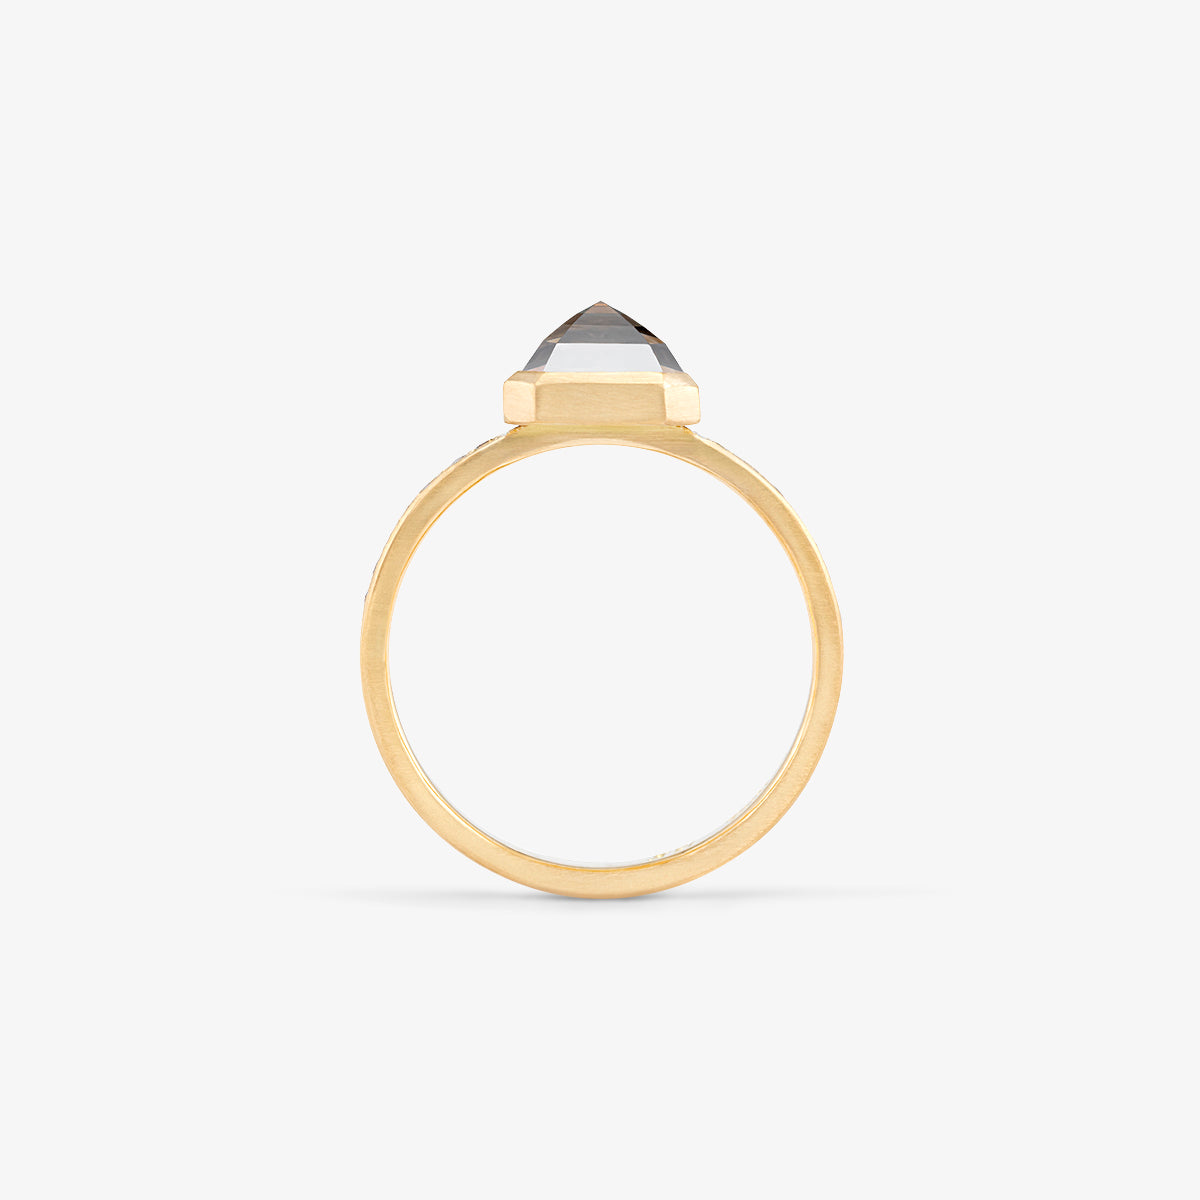 1.26 Carat One-of-a-Kind Mogul Cut Diamond Ring